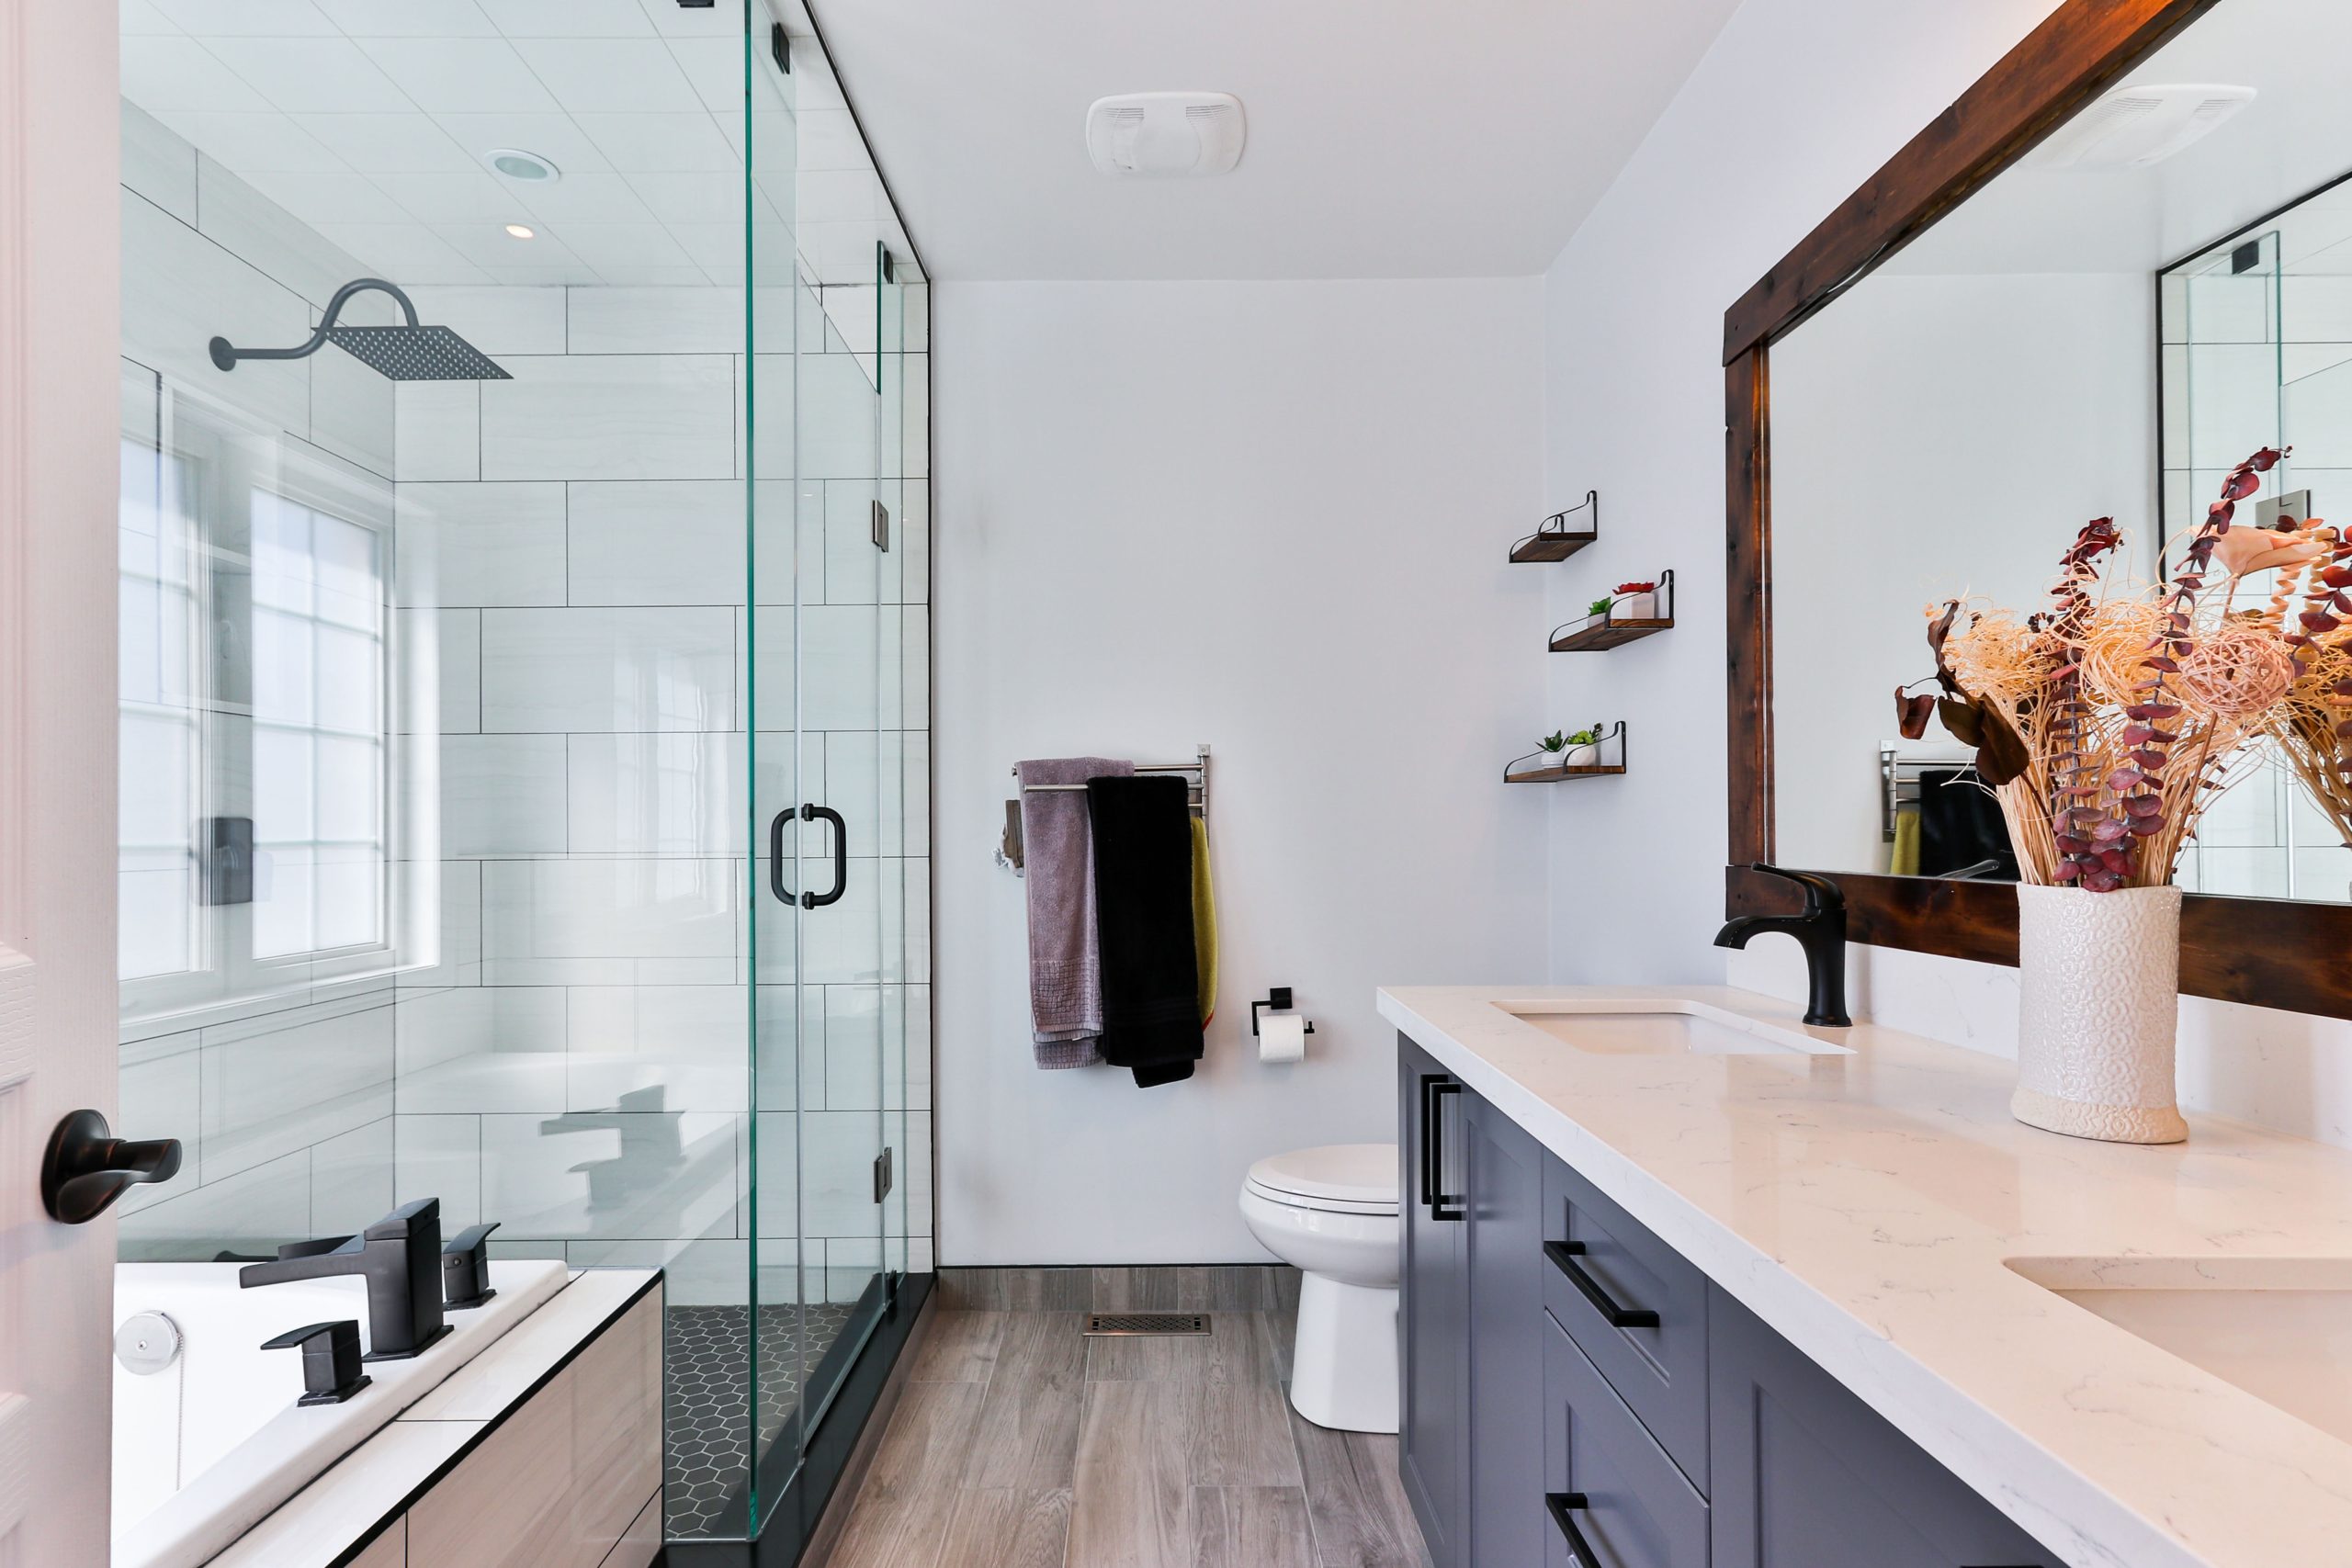 bathroom renovation costs in montreal